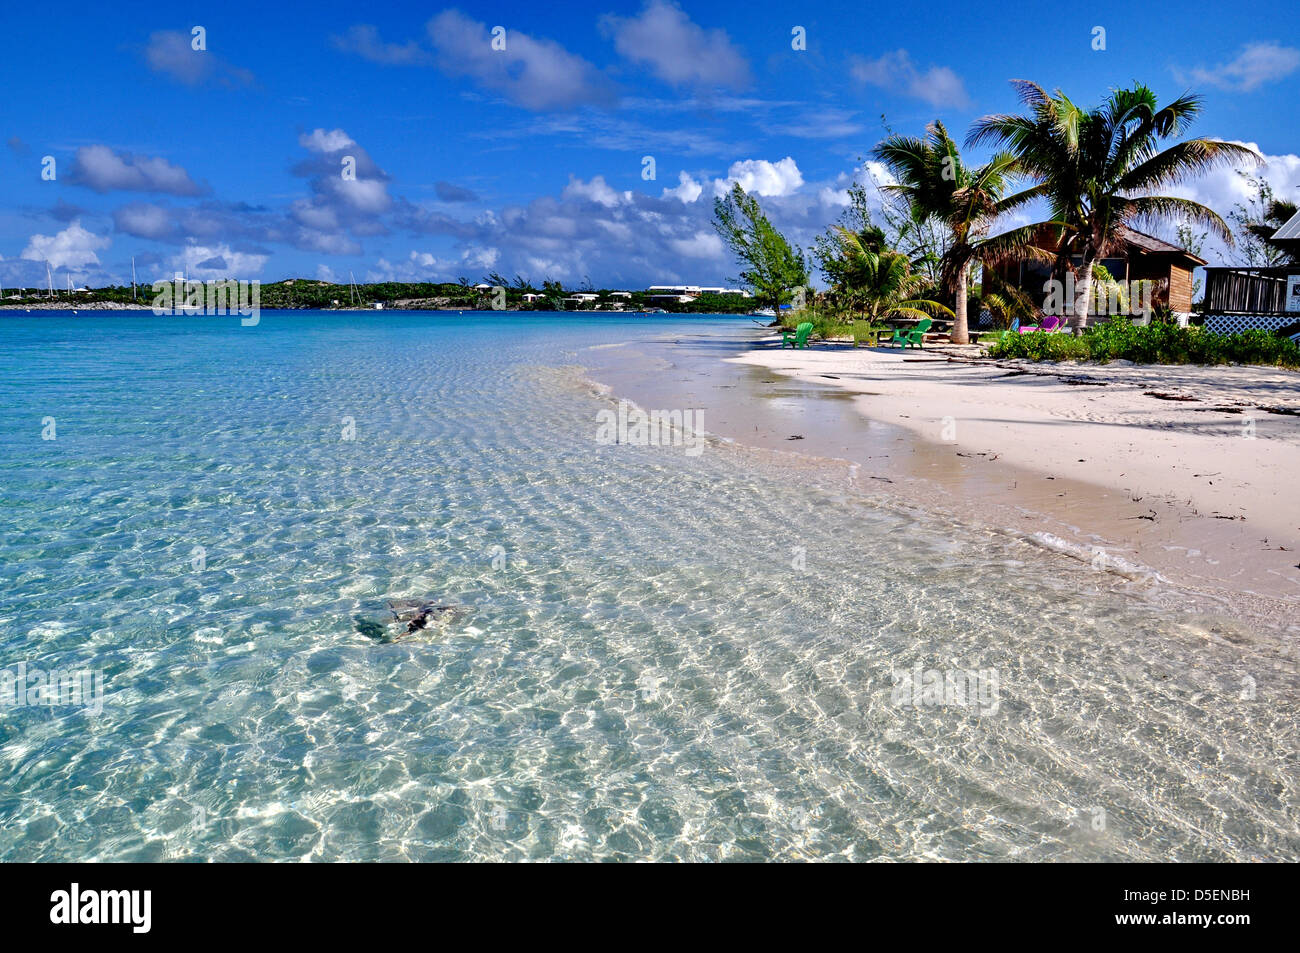 Caraibi, Bahamas, spiaggia, sky, tropicale tropici, spiagge, bianco, sabbia, oceano mare, surf, nuvole, nuvoloso, paradiso,turchese Foto Stock